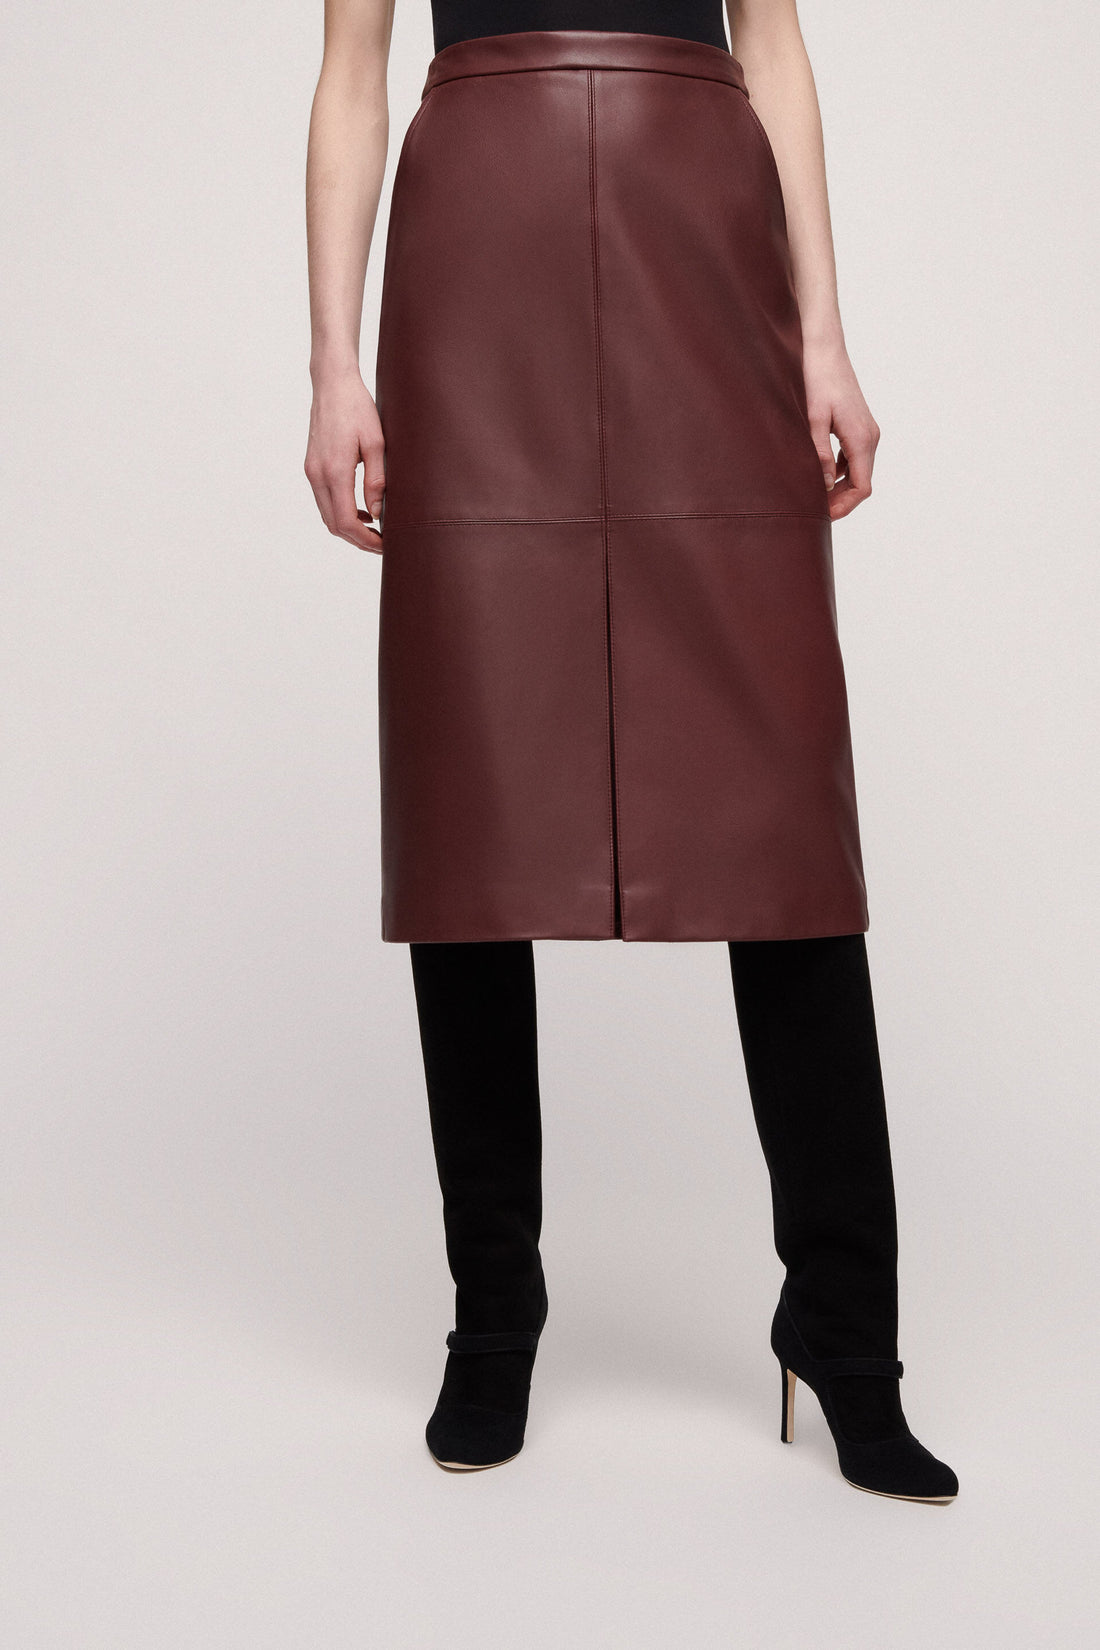 Federale Leather Skirt_FEDERALE_2456_01